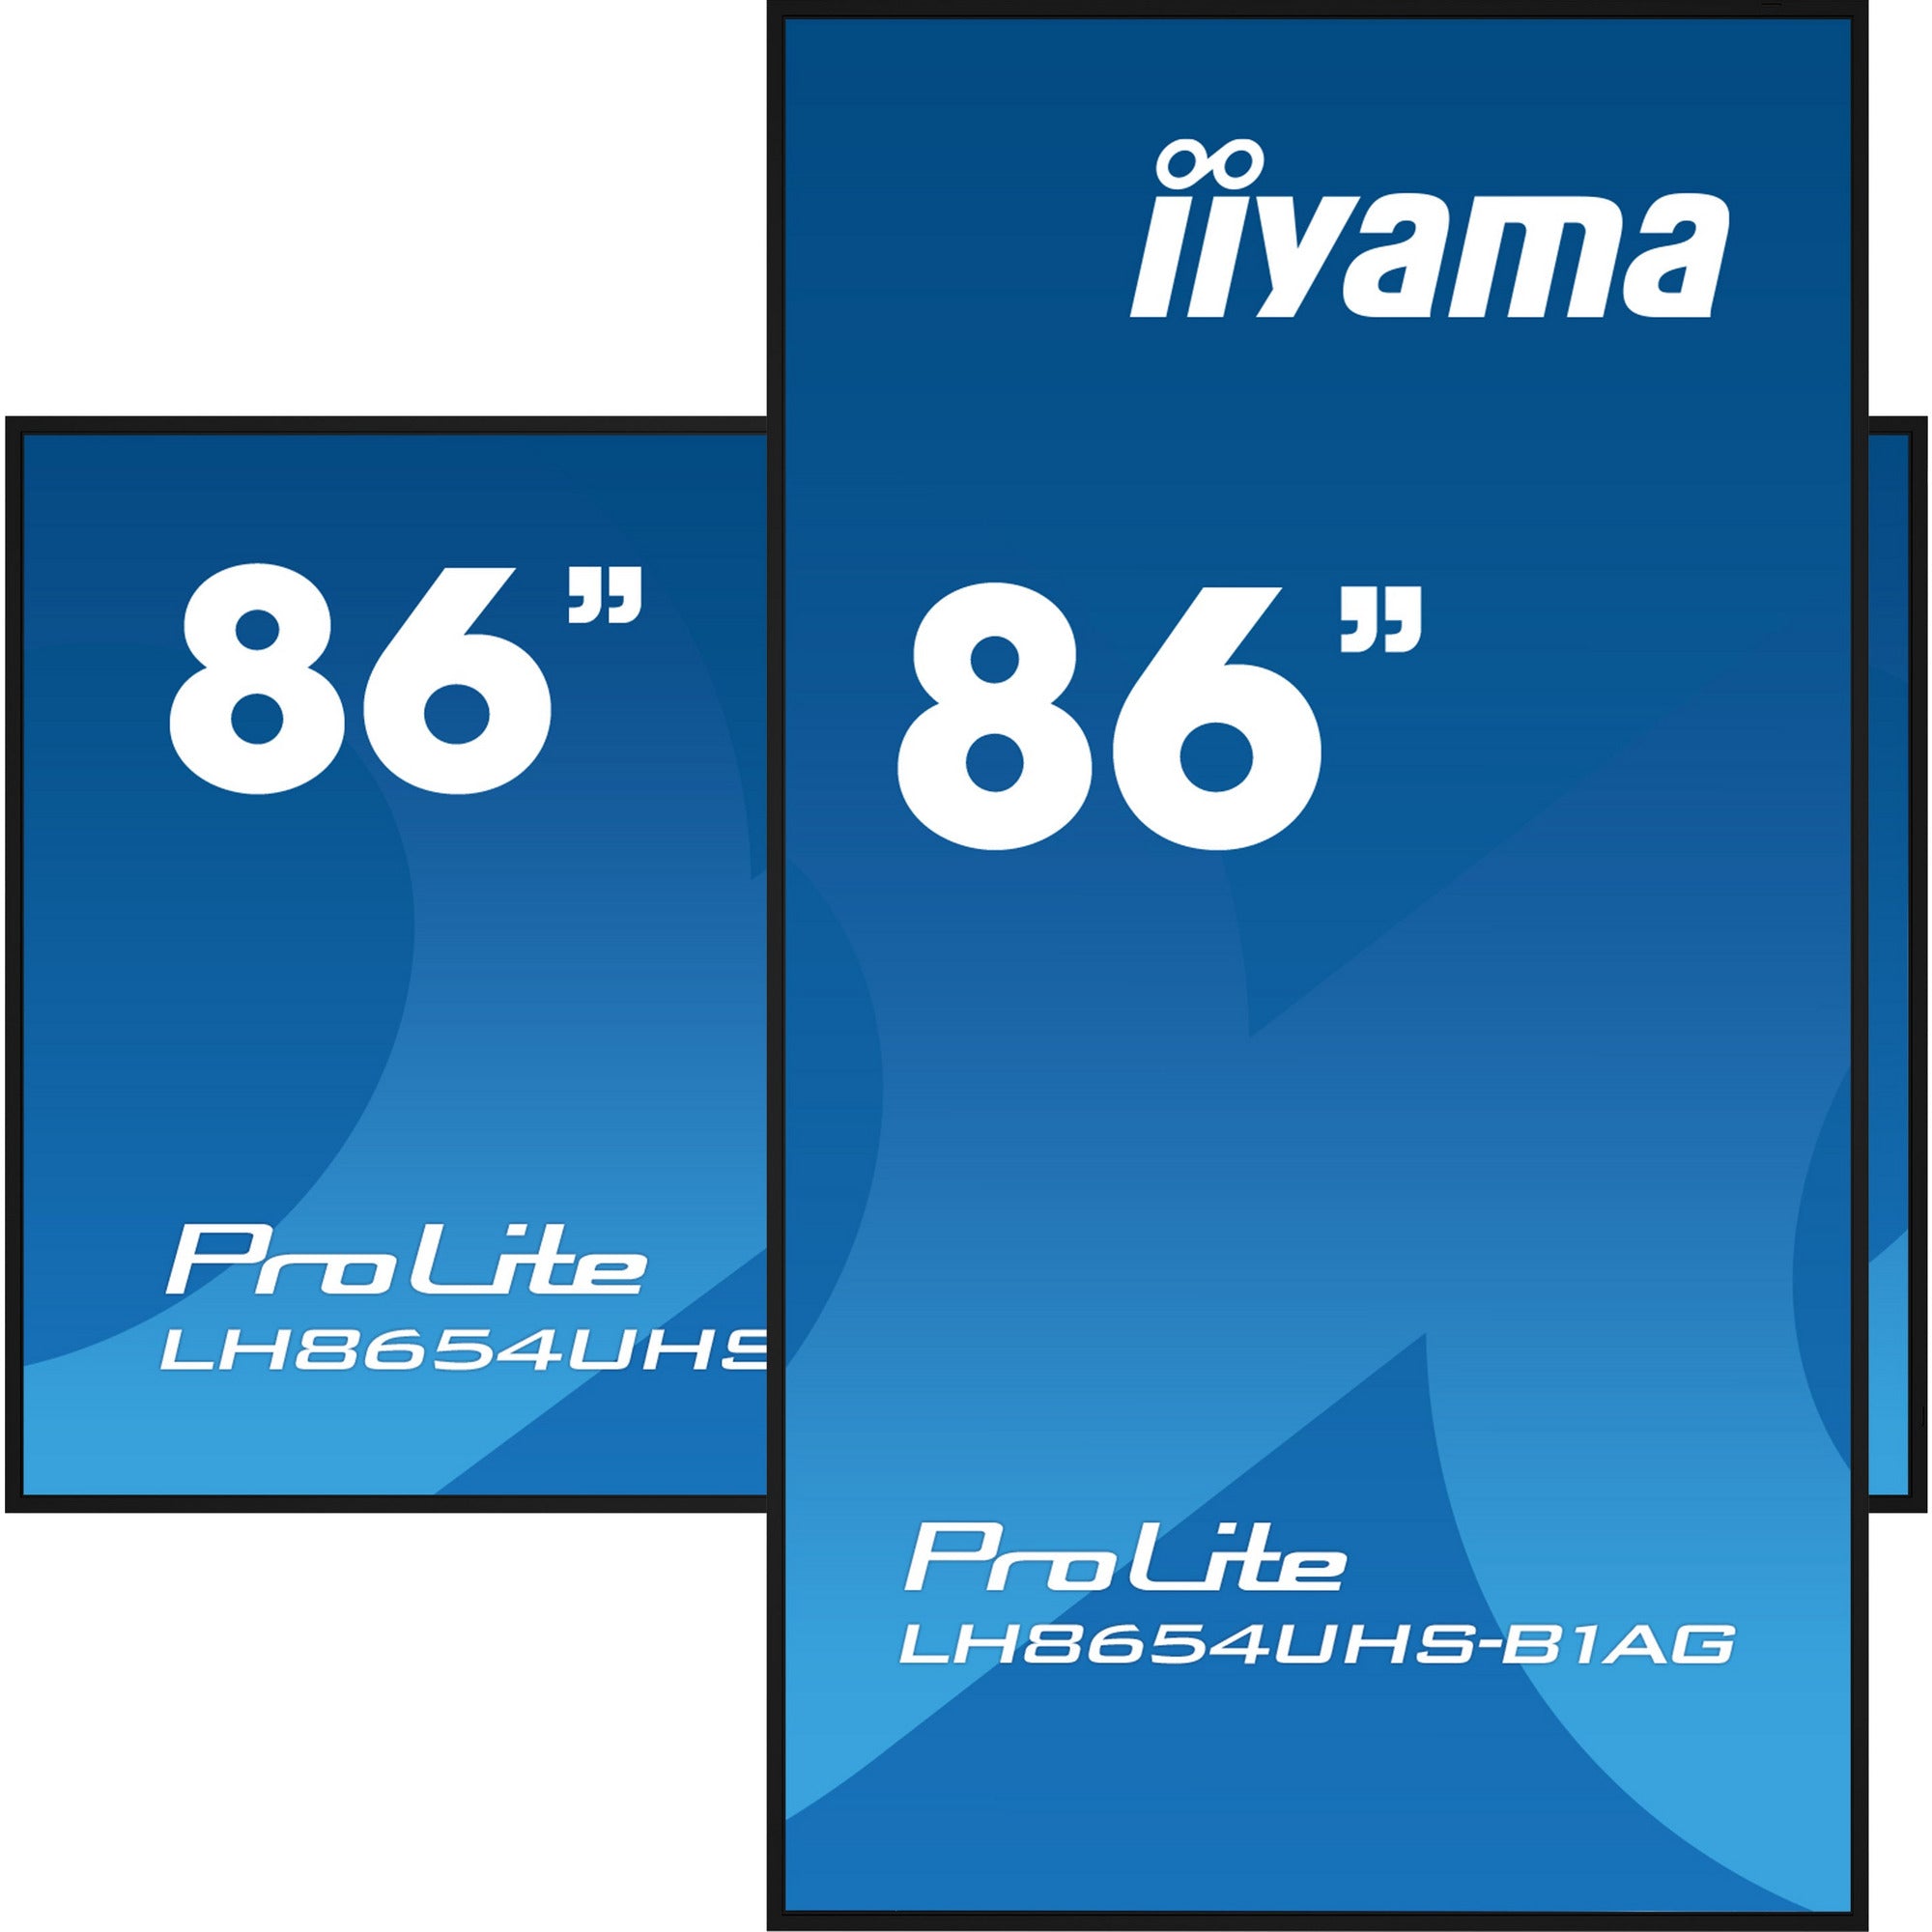 Iiyama PROLITE LH8654UHS-B1AG 86" 4K UHD Professional Digital Signage 24/7 display featuring Android OS, FailOver and Intel® SDM slot